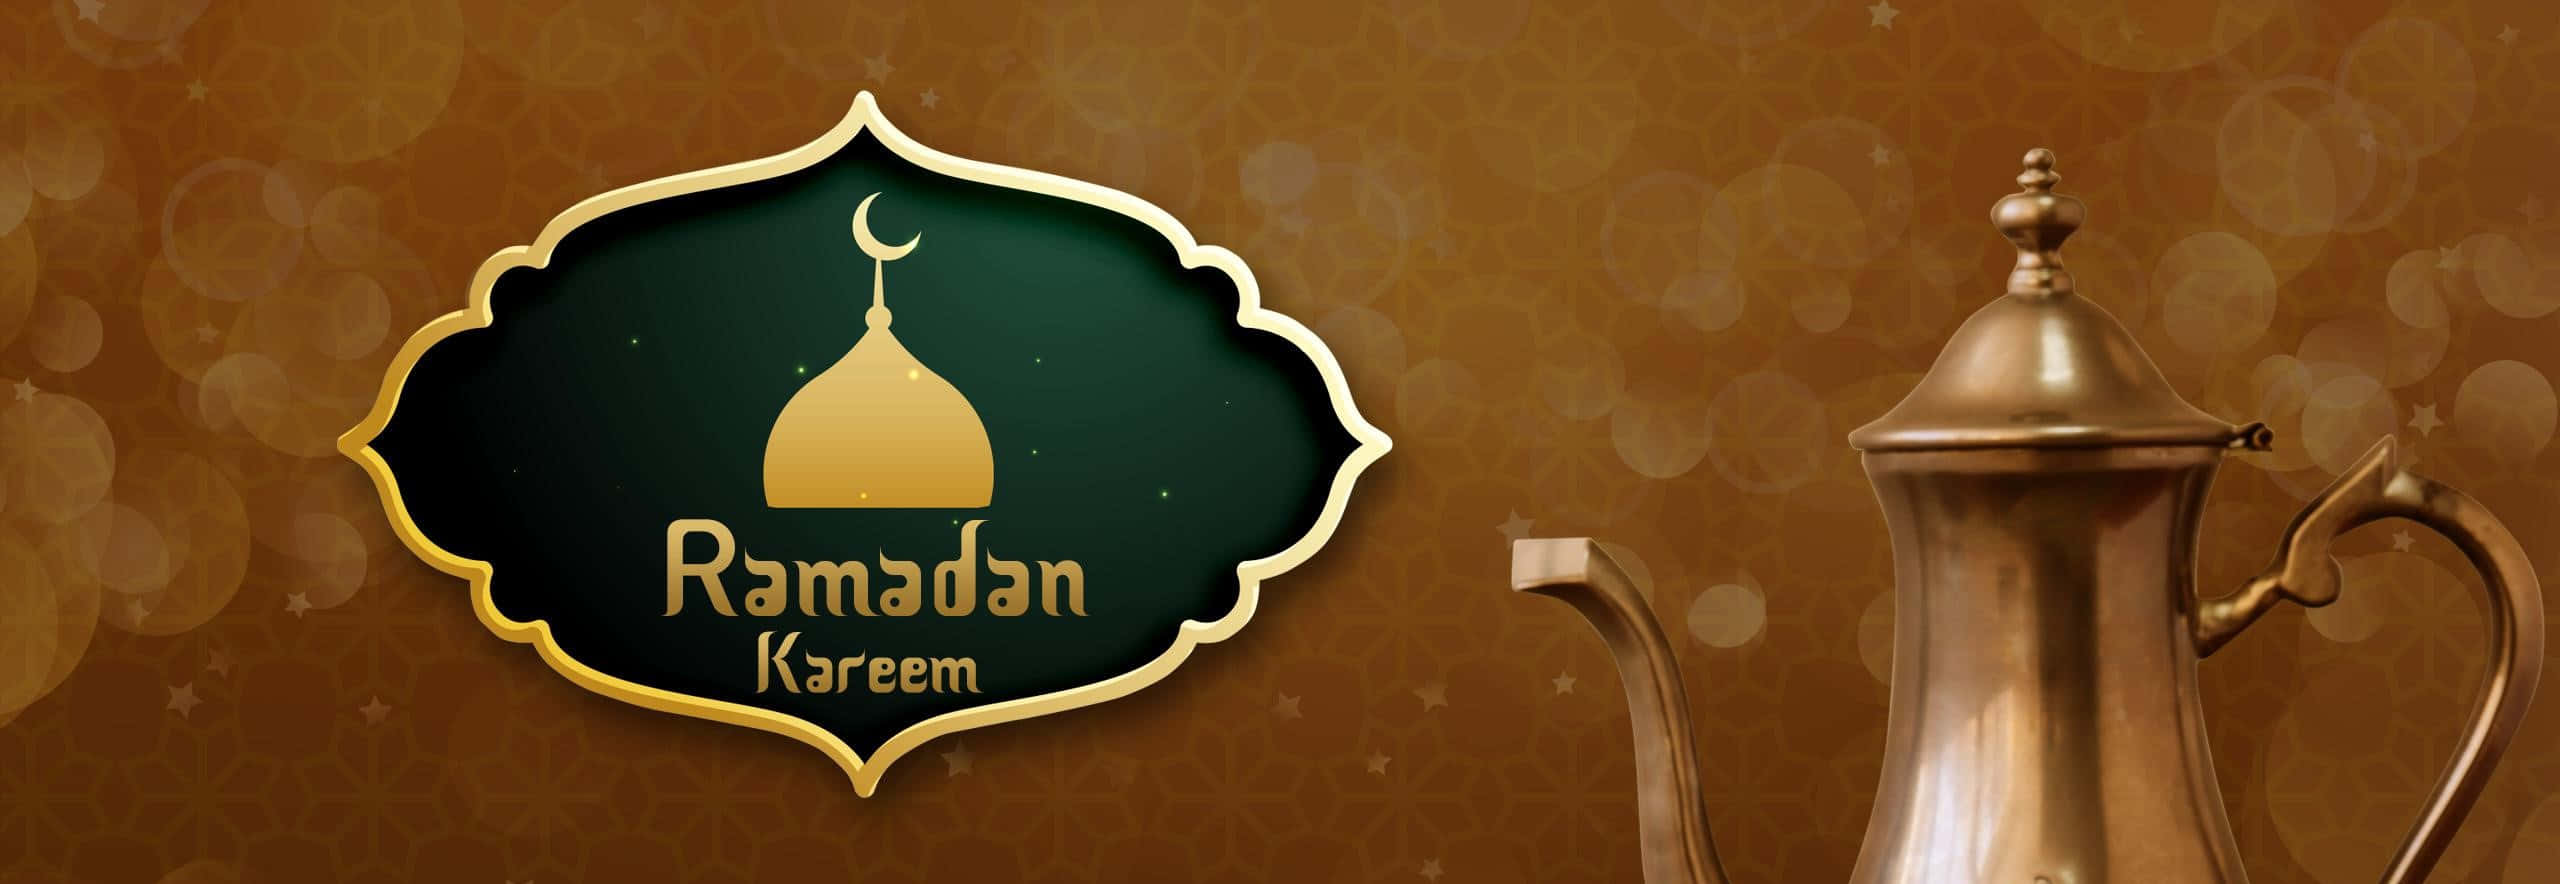 Ramadankareem-bild